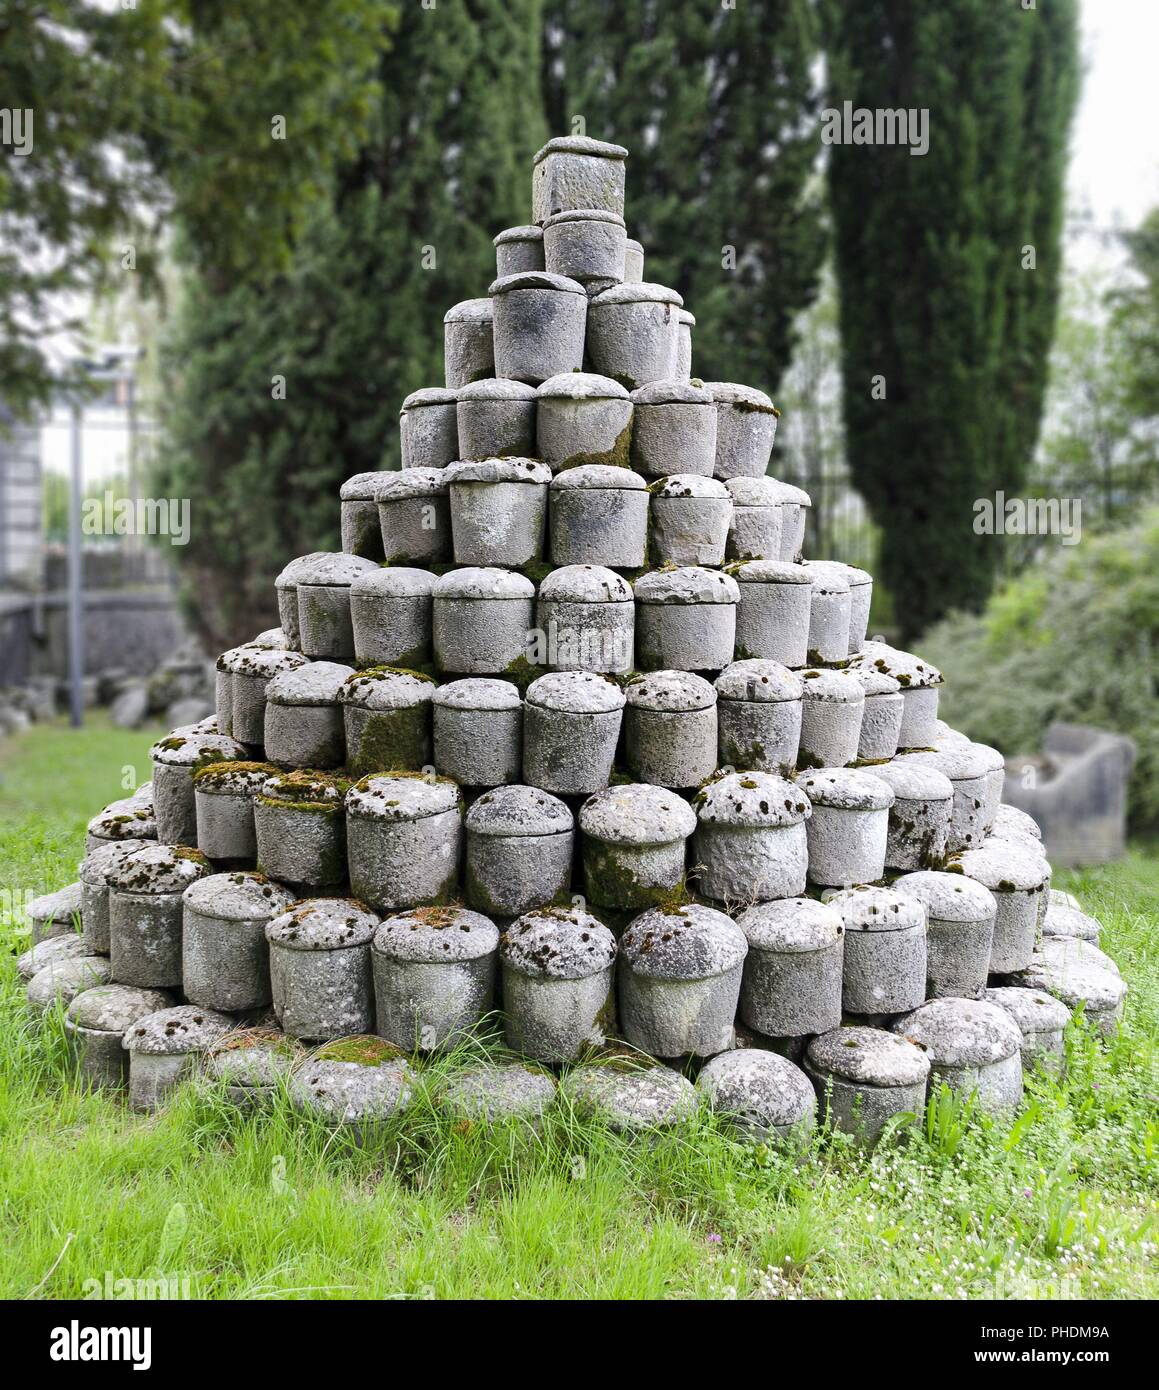 piled up roman stone urns Stock Photo